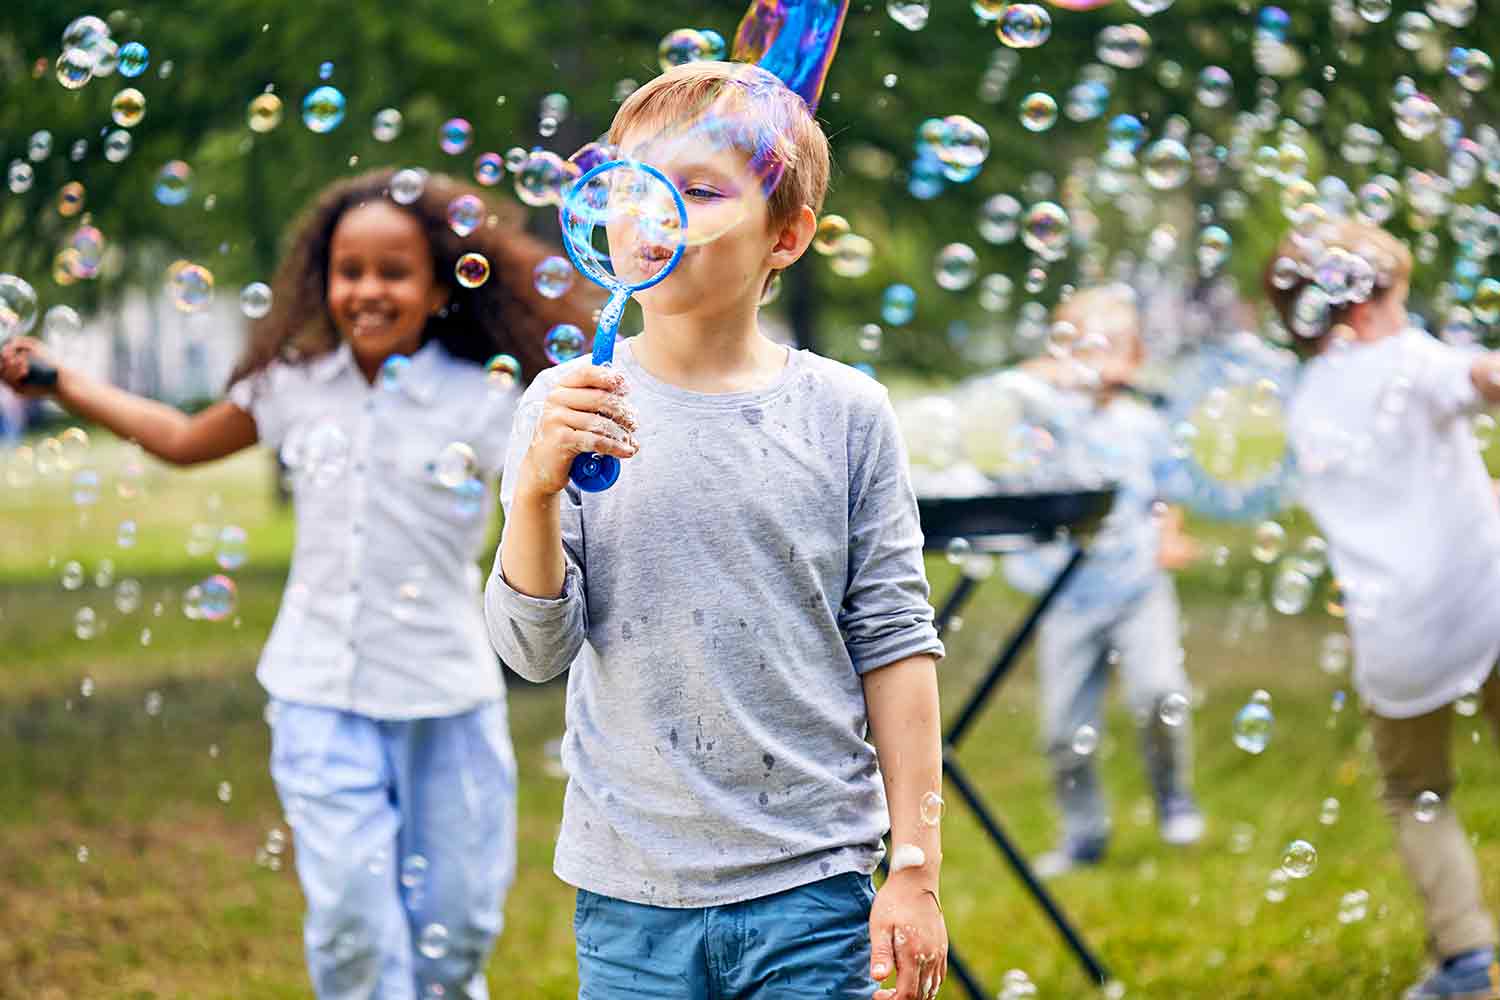 A boy blows bubbles through a wand as kids in the background run through bubbles.